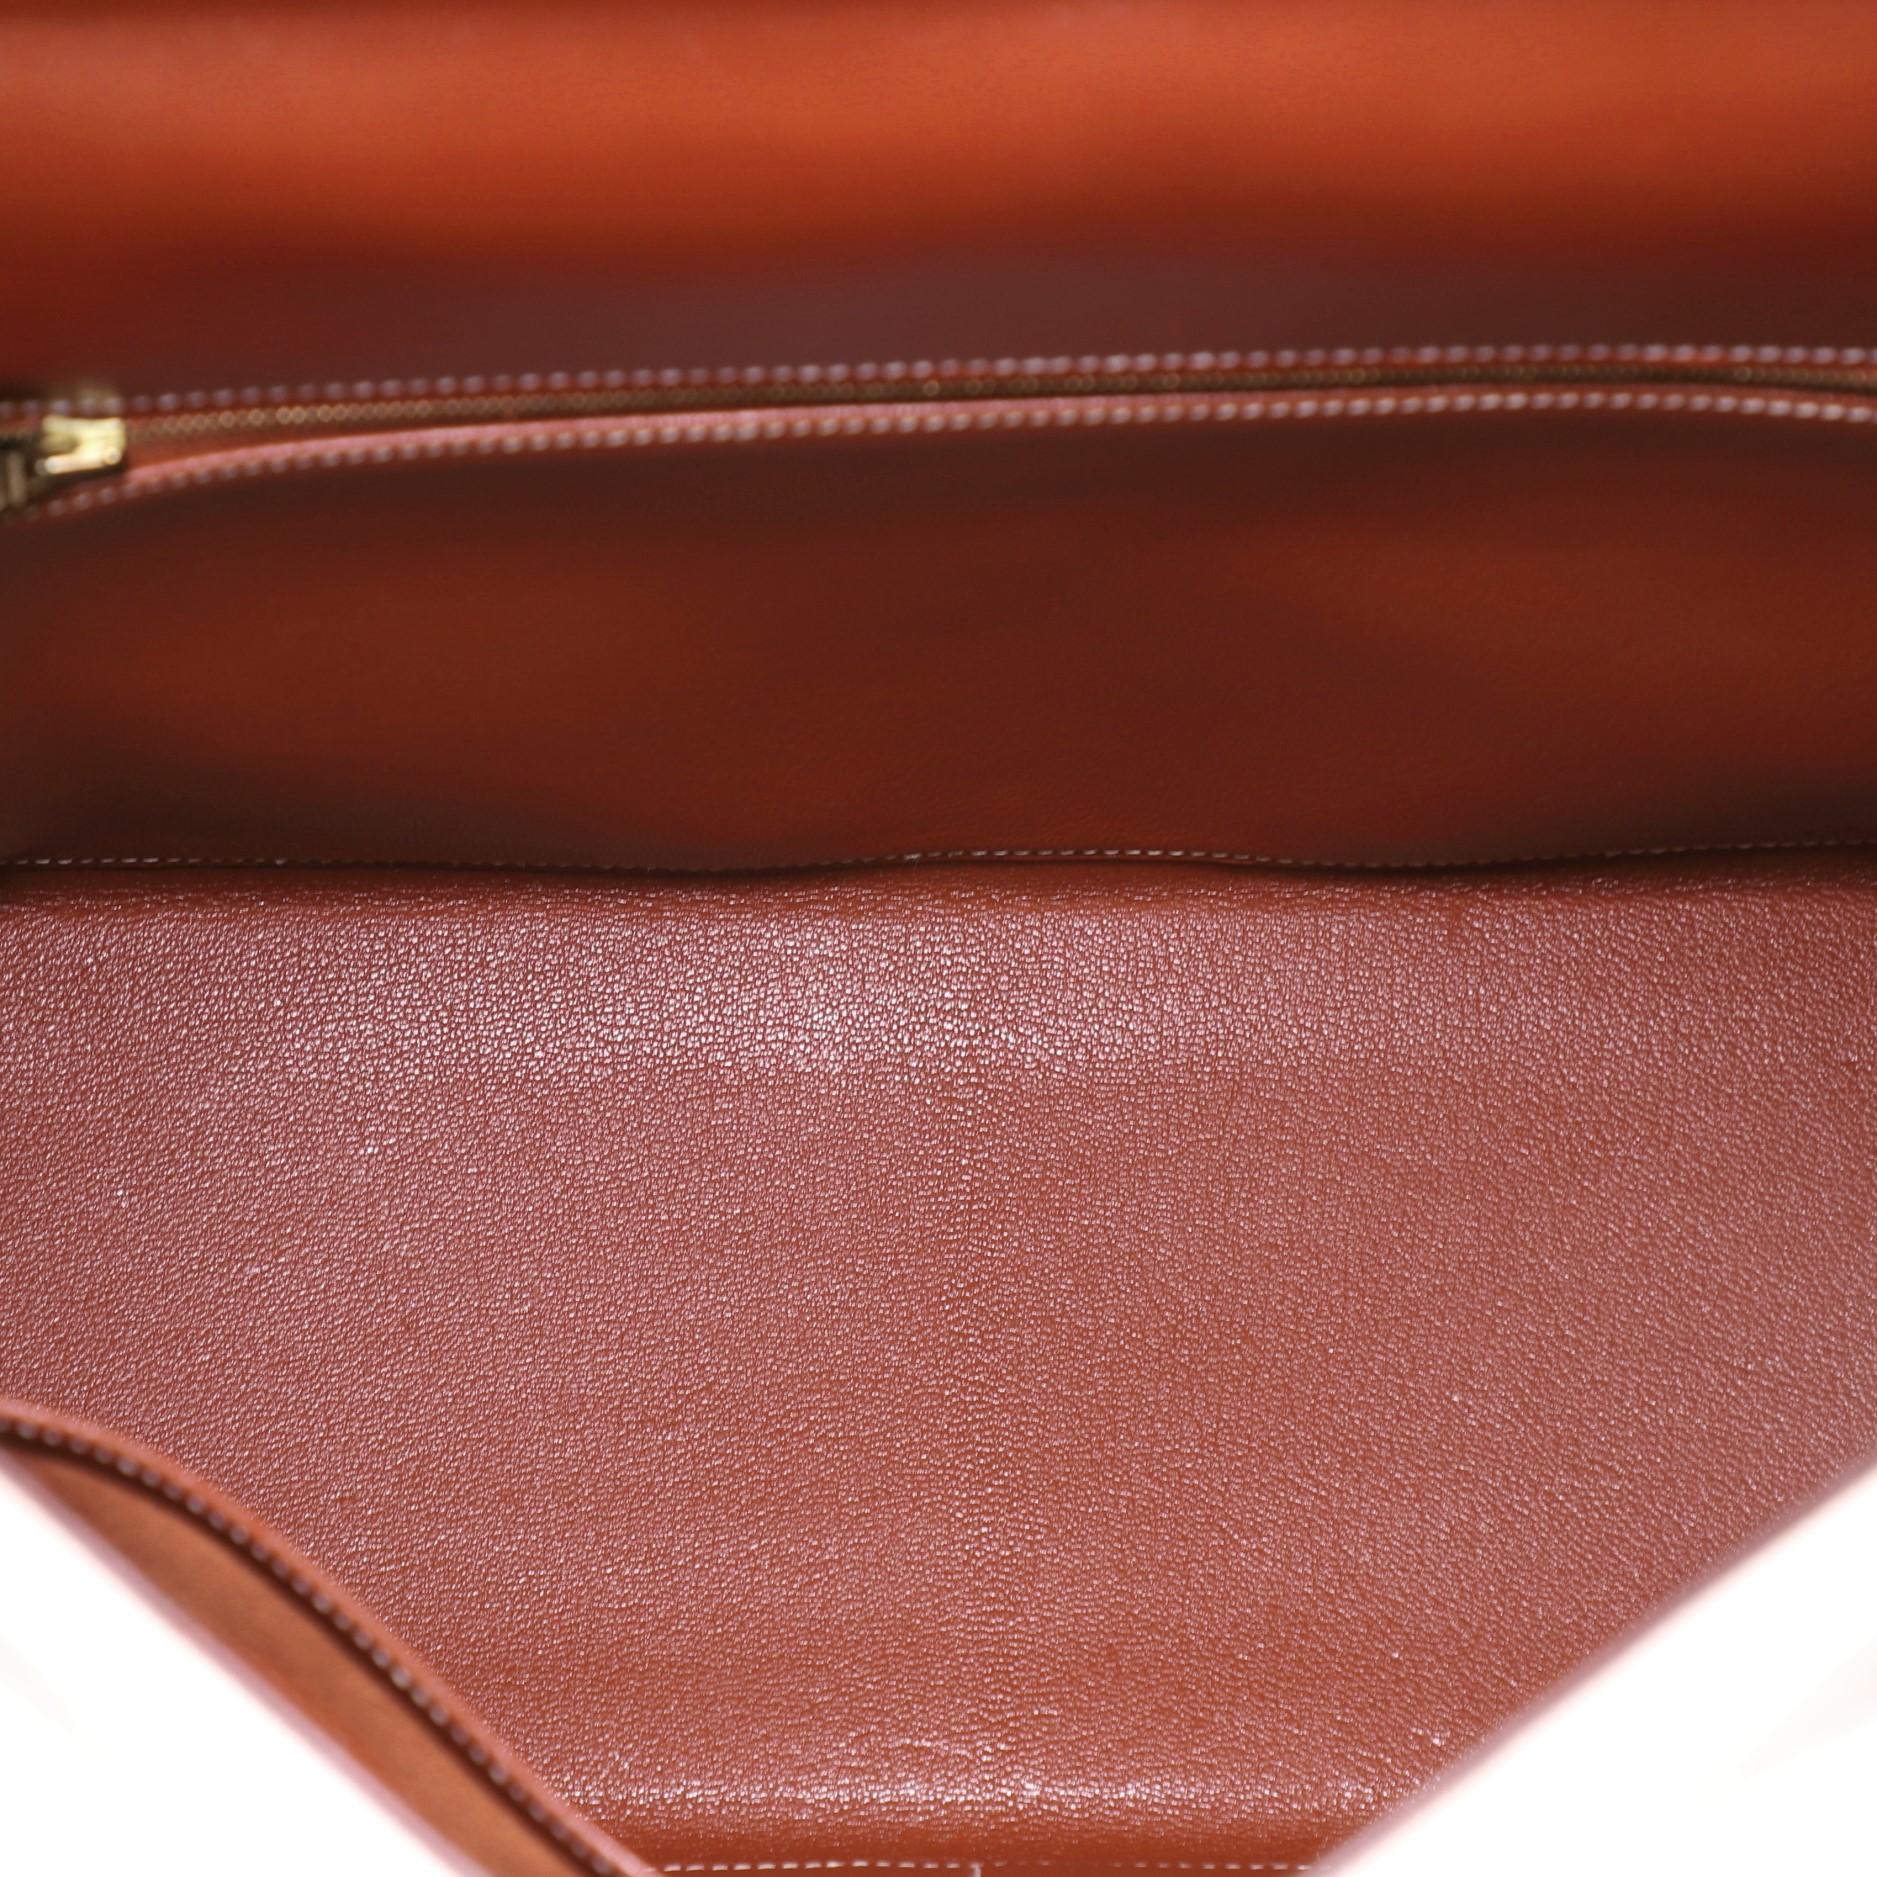 Hermes Kelly Handbag Brique Box Calf with Gold Hardware 35 5